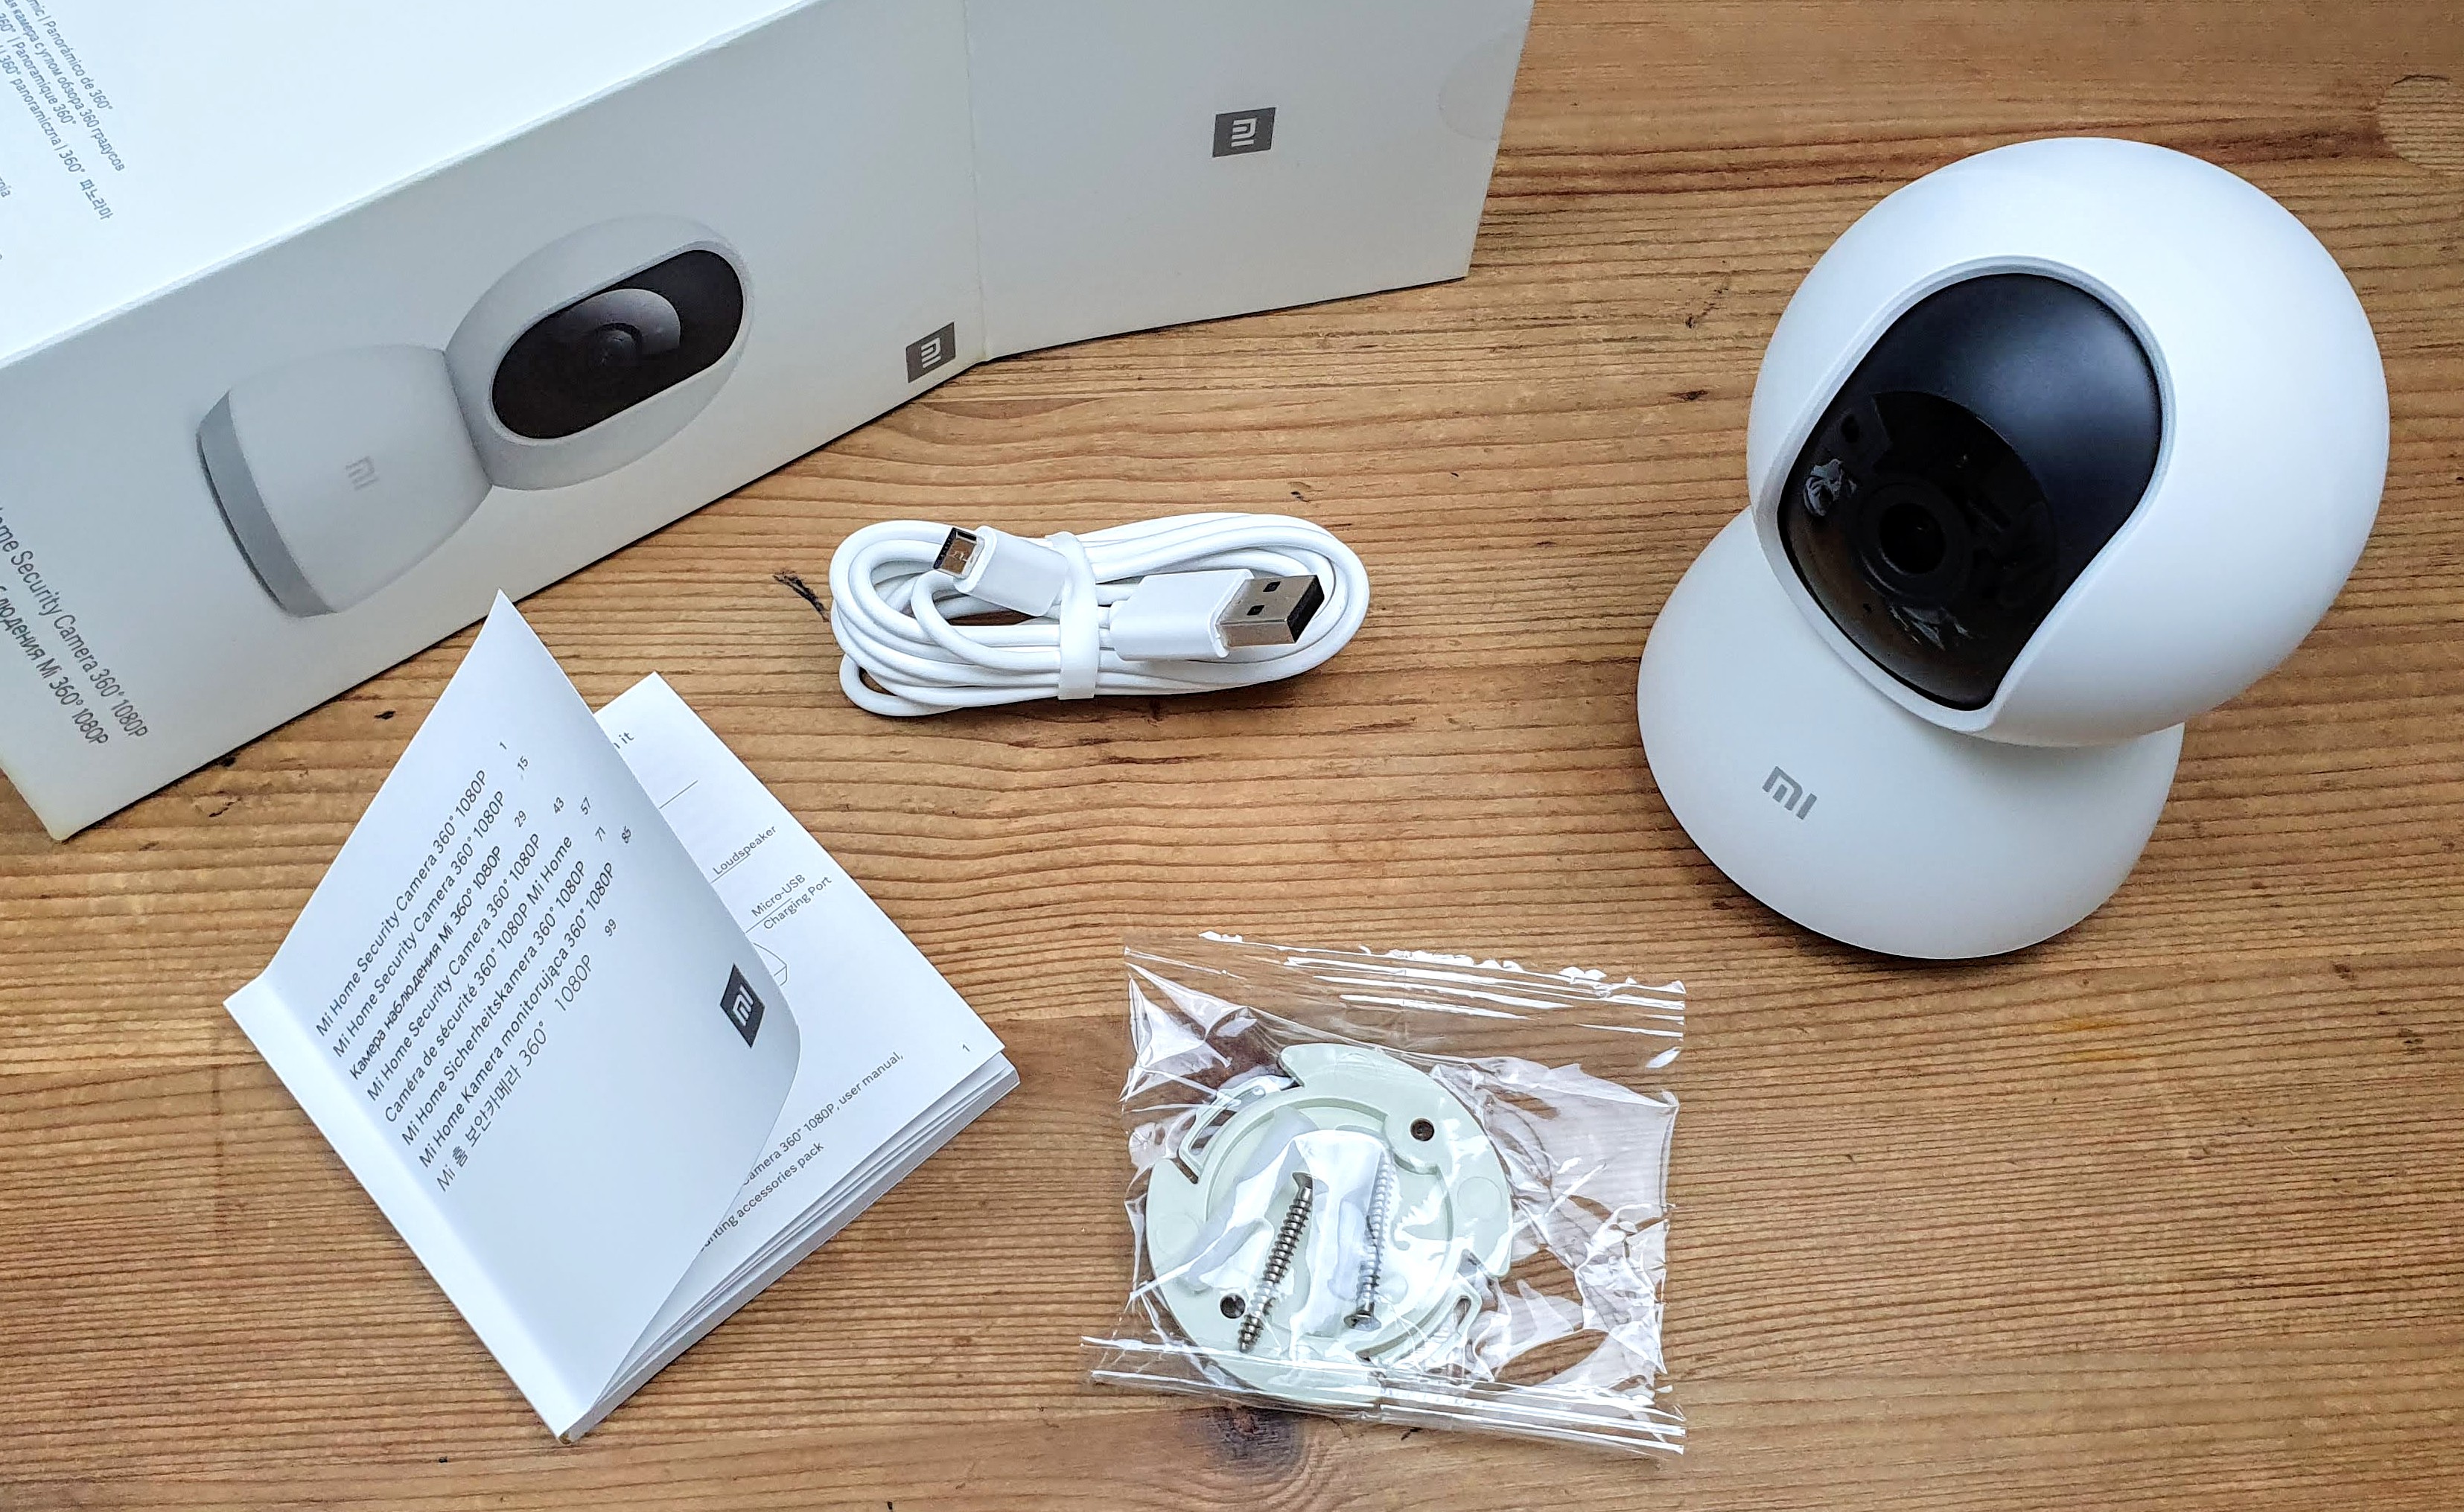 Mi Home Security Camera 360° Review | Latest Wifi CCTV Camera 